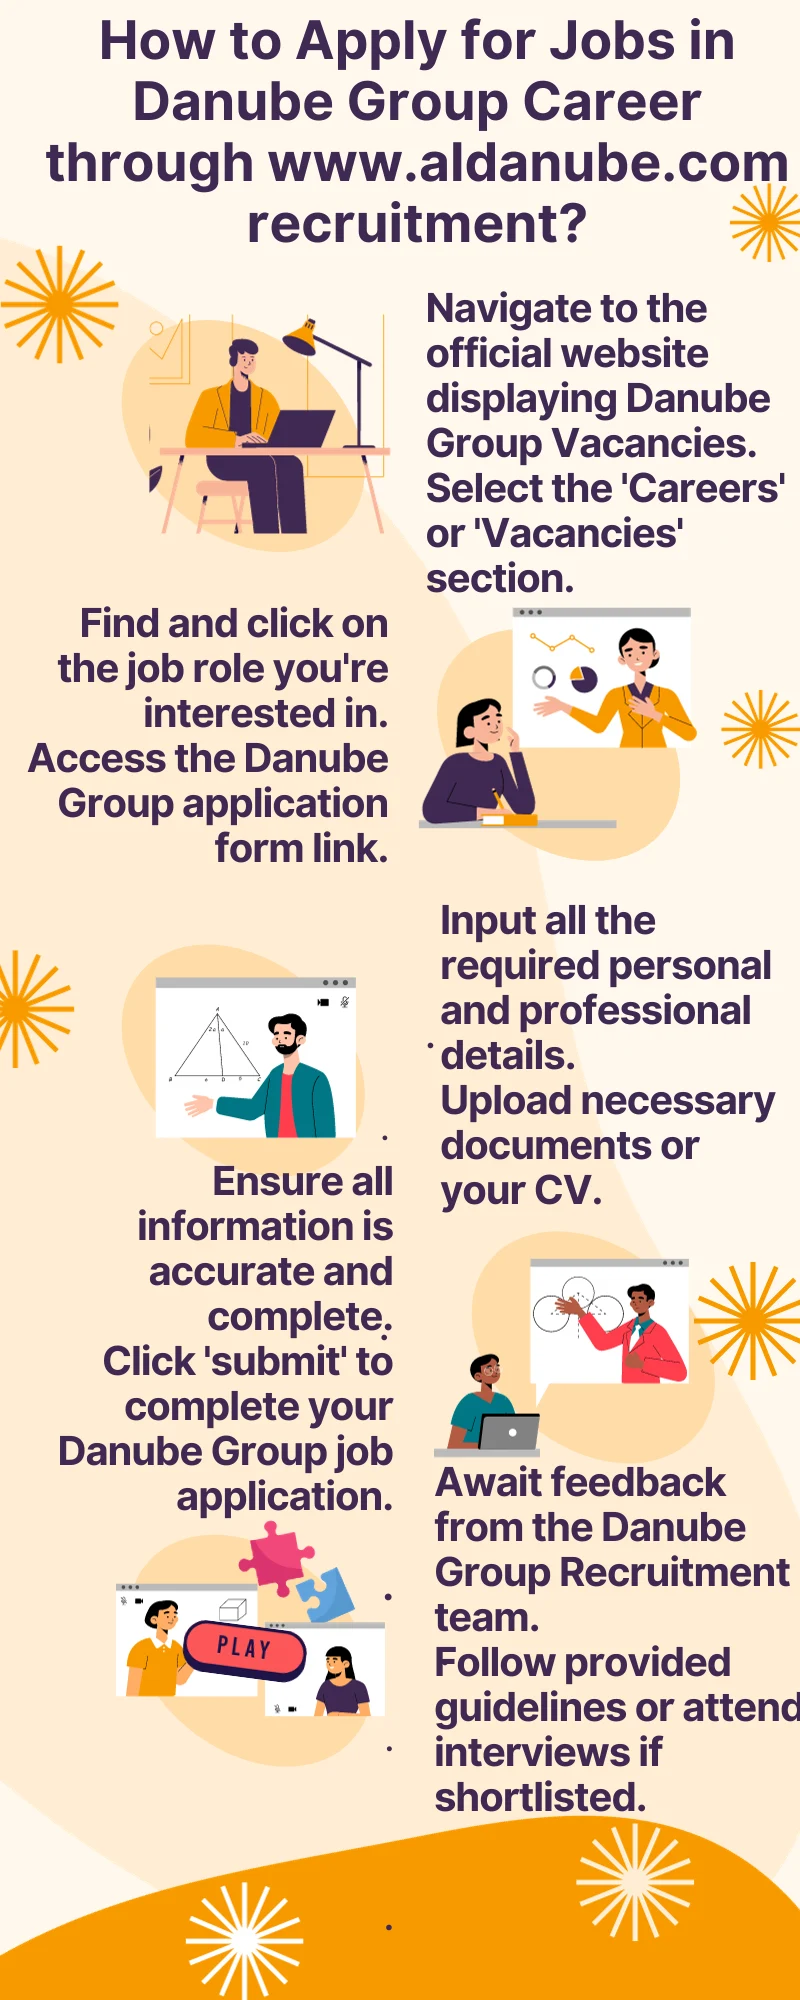 How to Apply for Jobs in Danube Group Career through www.aldanube.com recruitment?